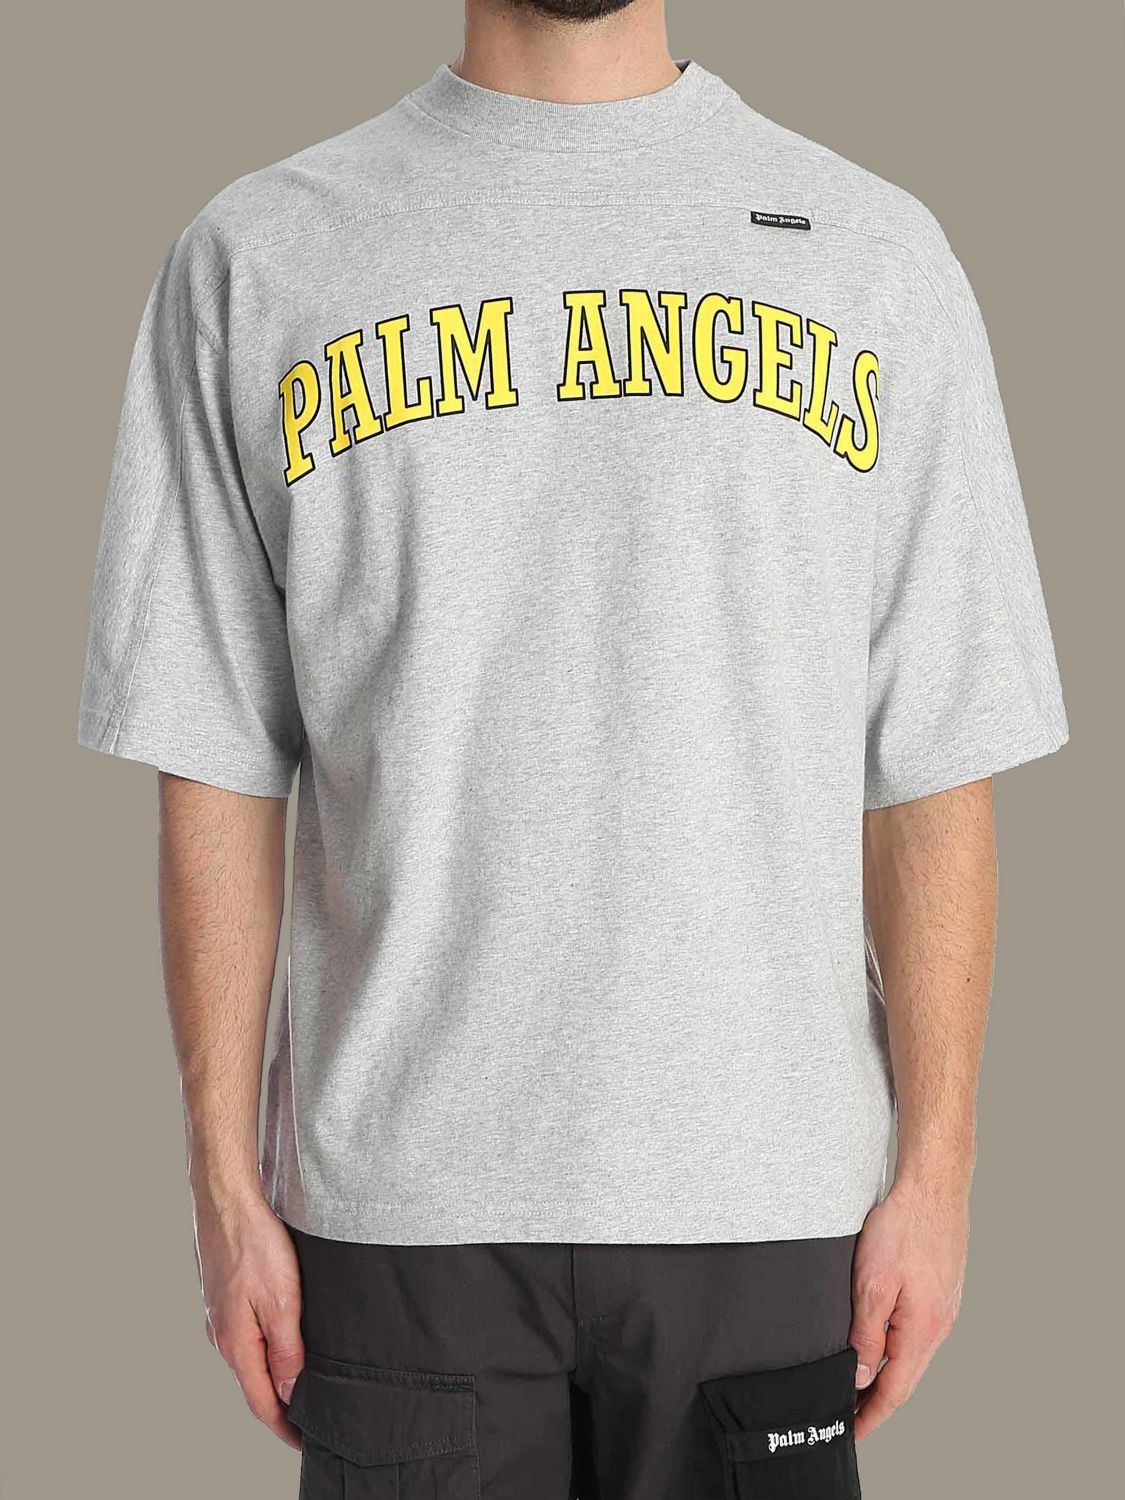 palm angels shirt mens